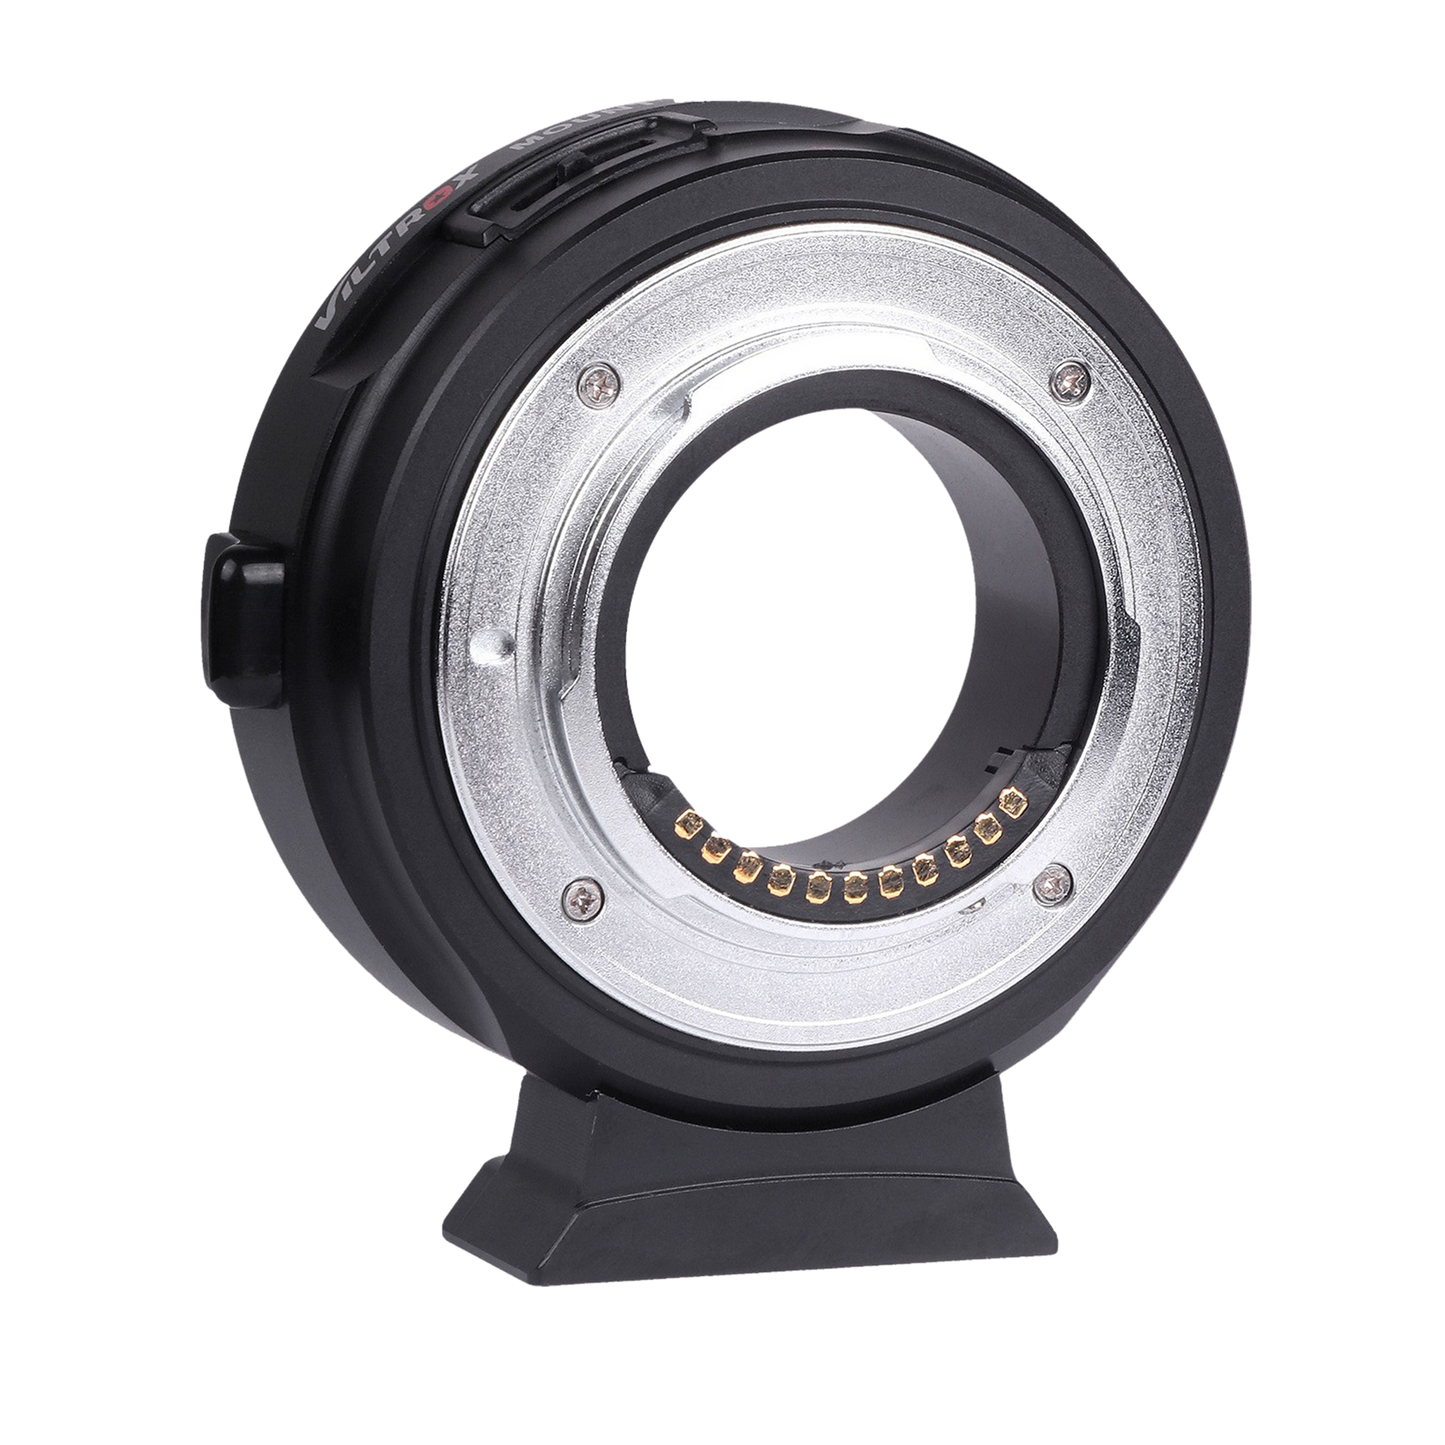 Viltrox EF-M1 adapter for Canon EF/EF-S lenses on 4/3 cameras